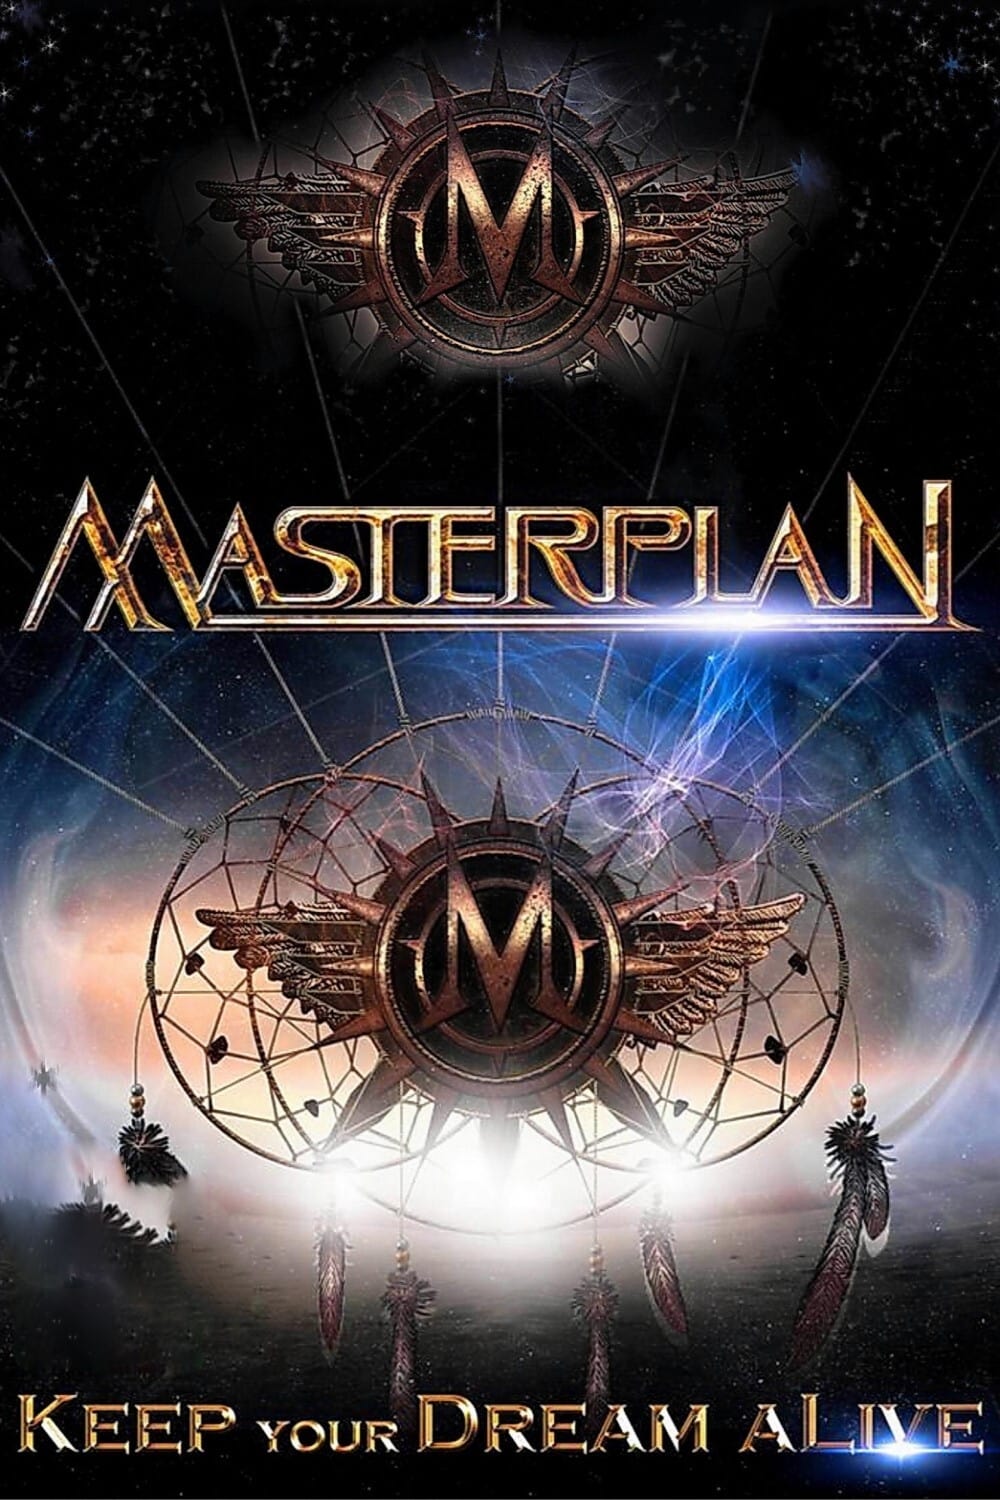 Masterplan - Keep Your Dream aLive